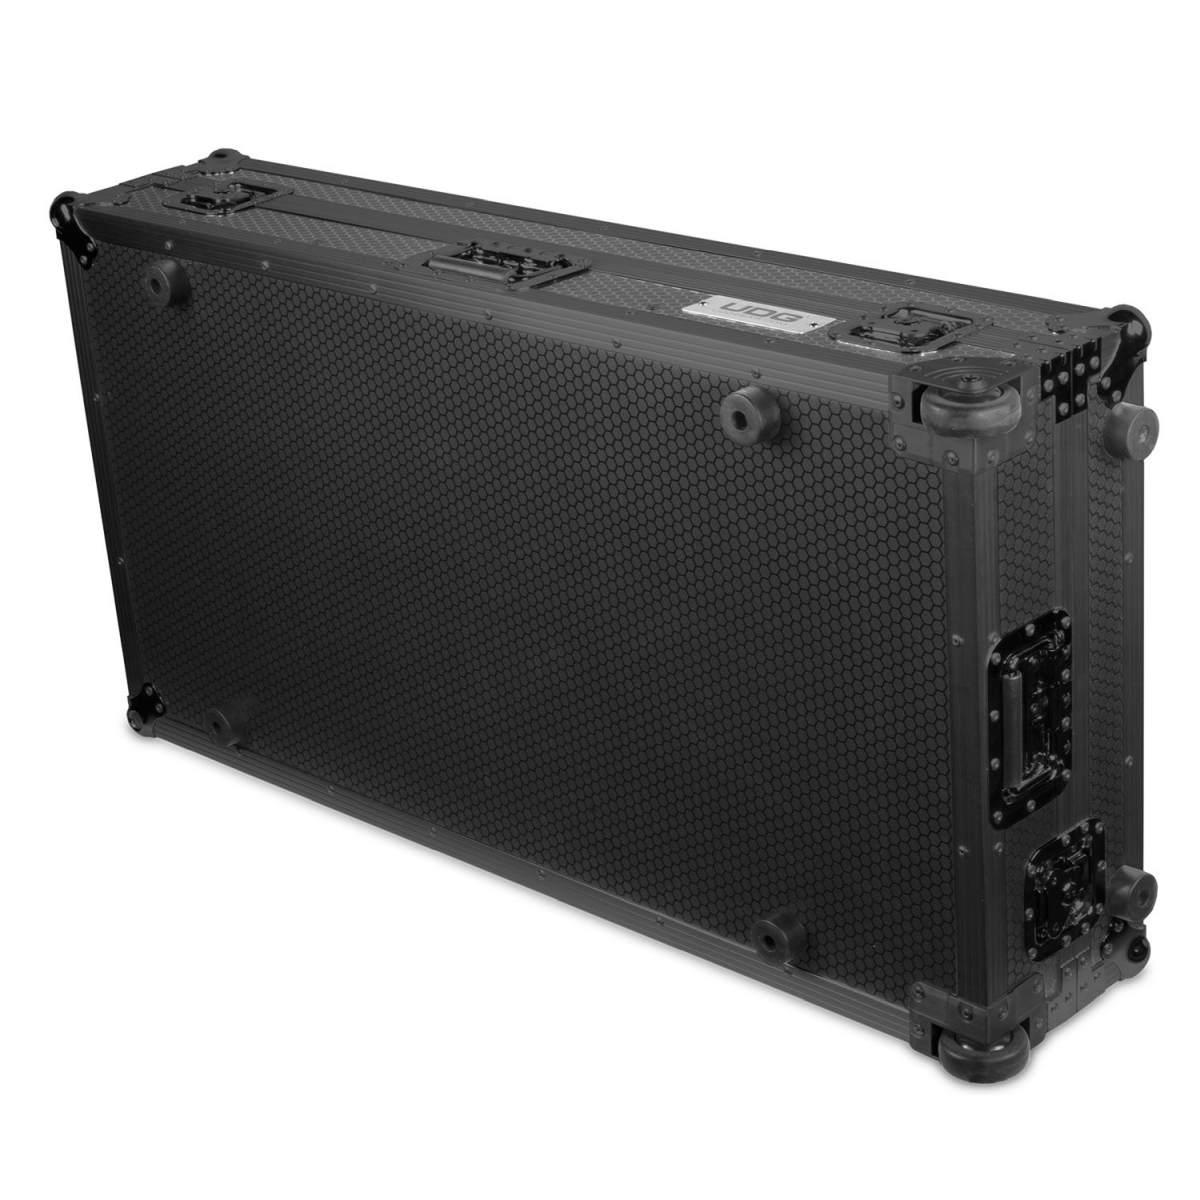 Udg u91086bl - ultimate fligt case set pioneer cdj-3000/a9 black plus (l&w)